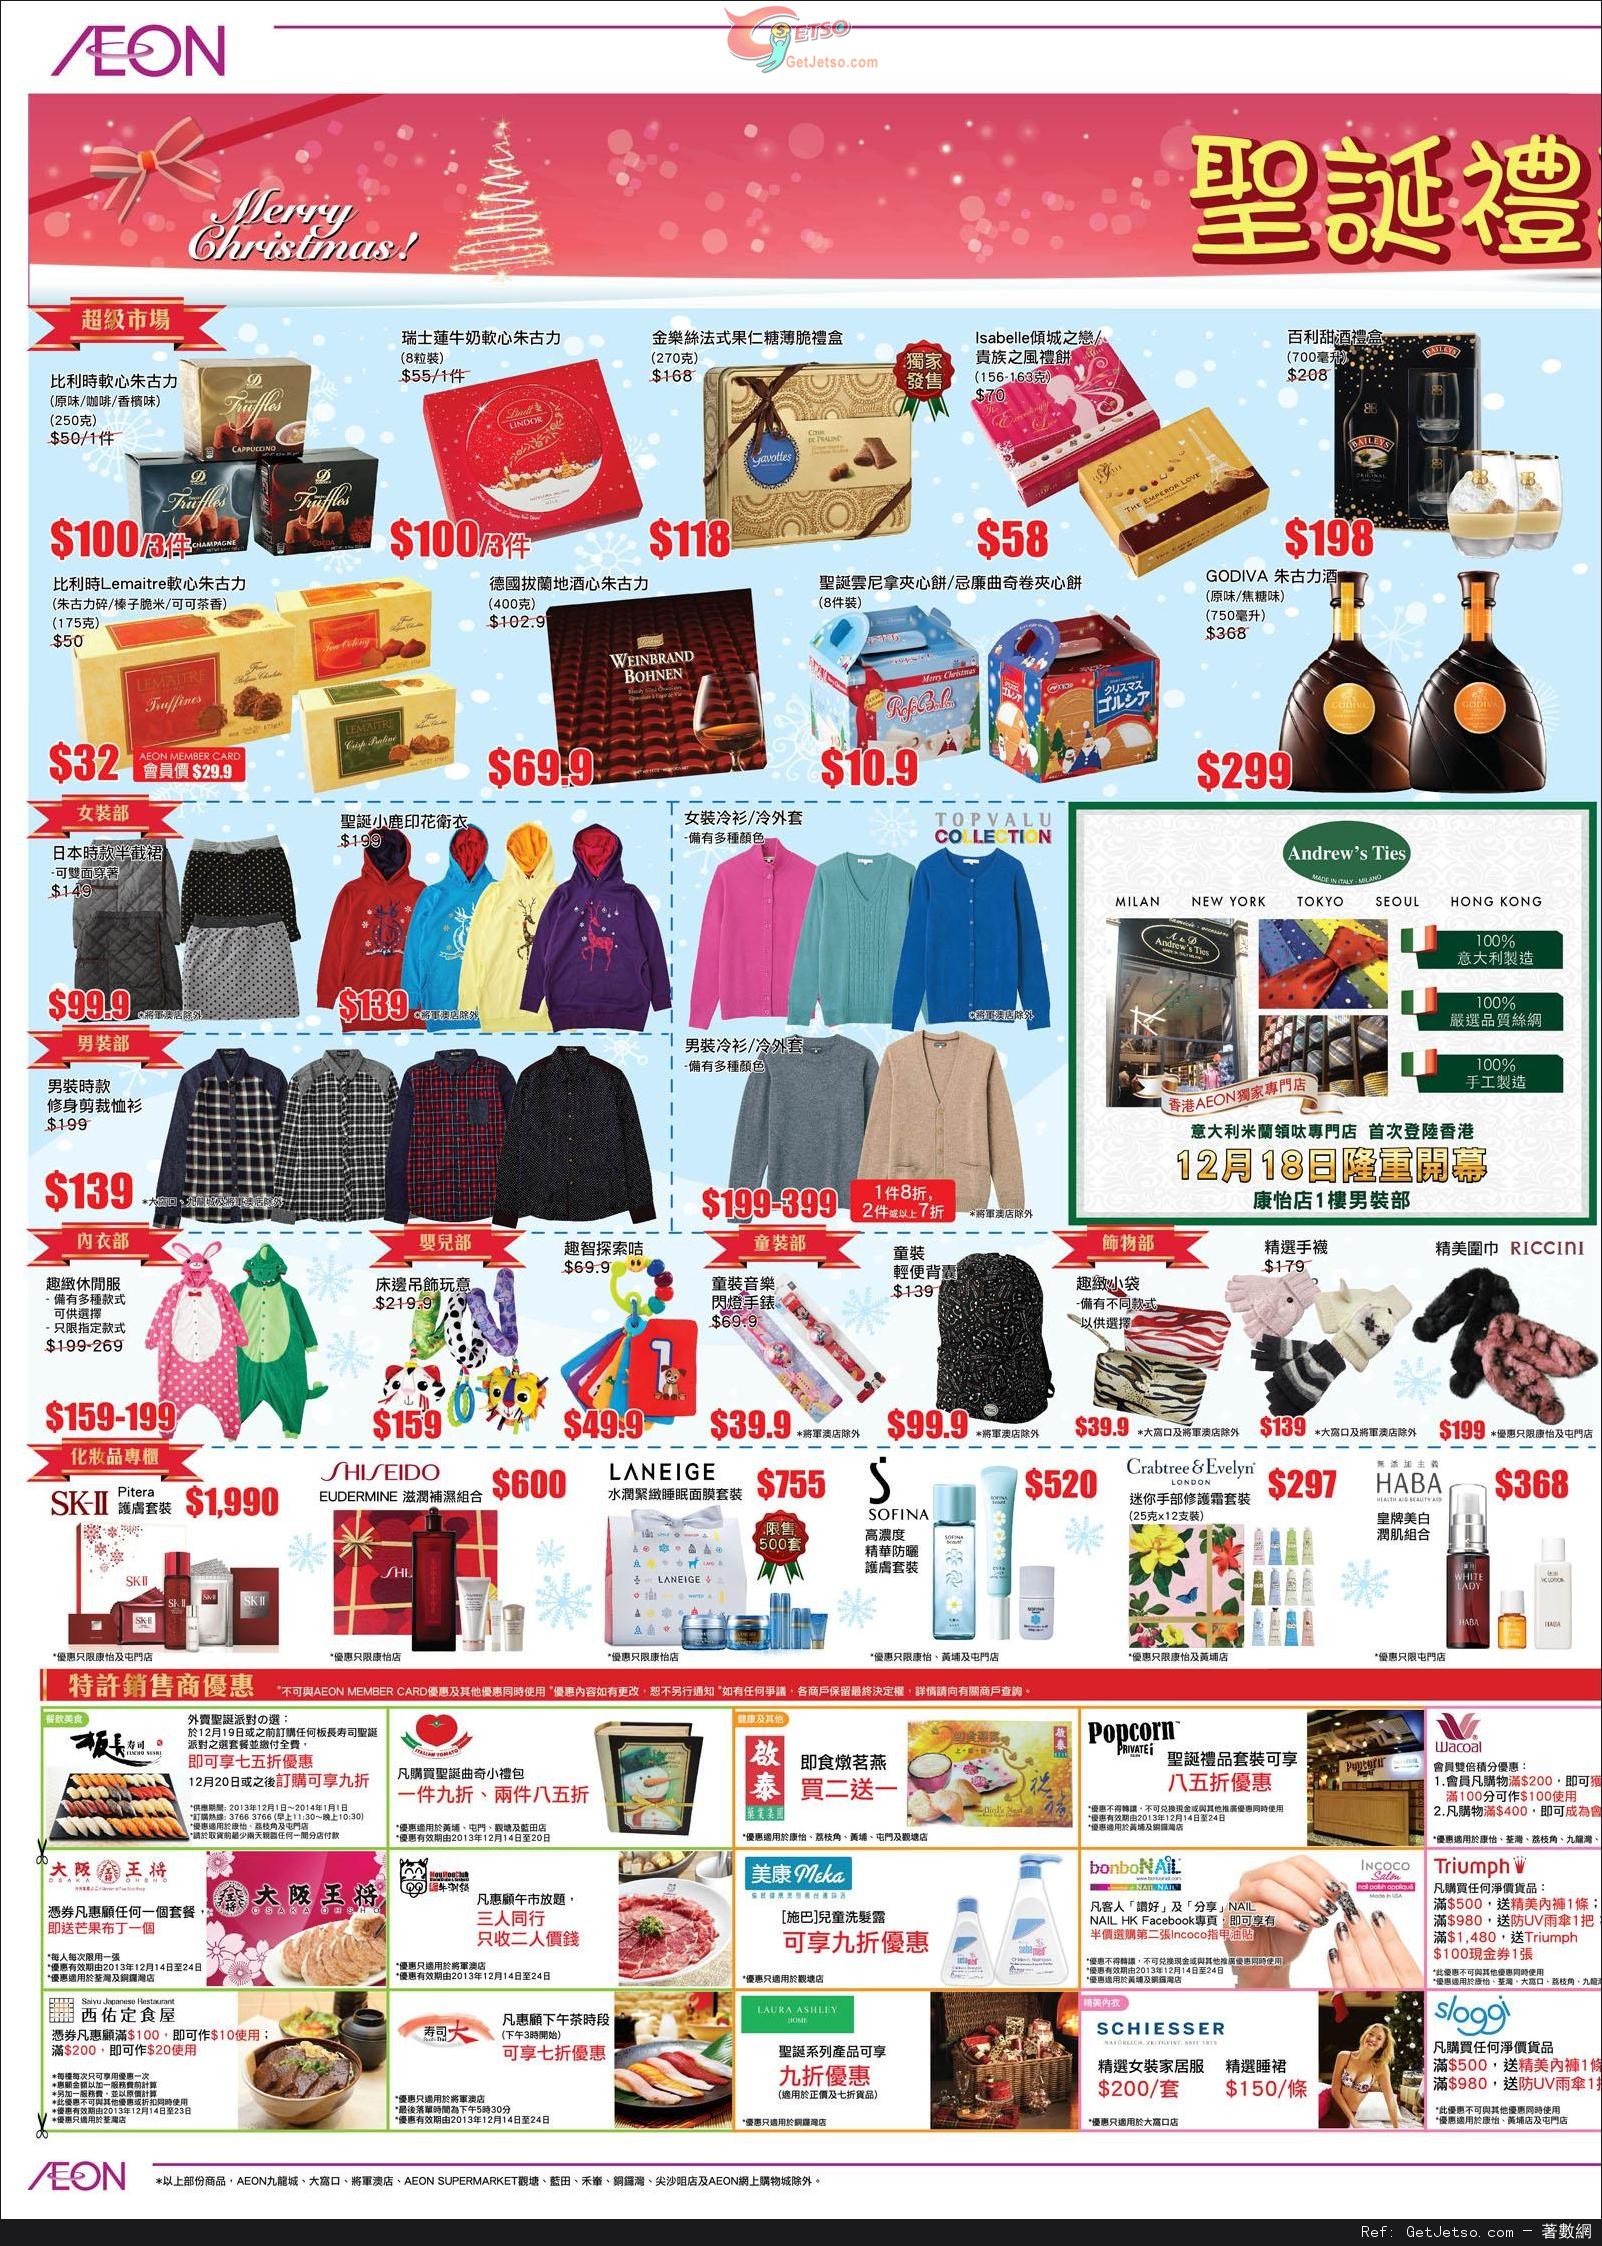 AEON 聖誕禮品及食品購買優惠(至13年12月24日)圖片2